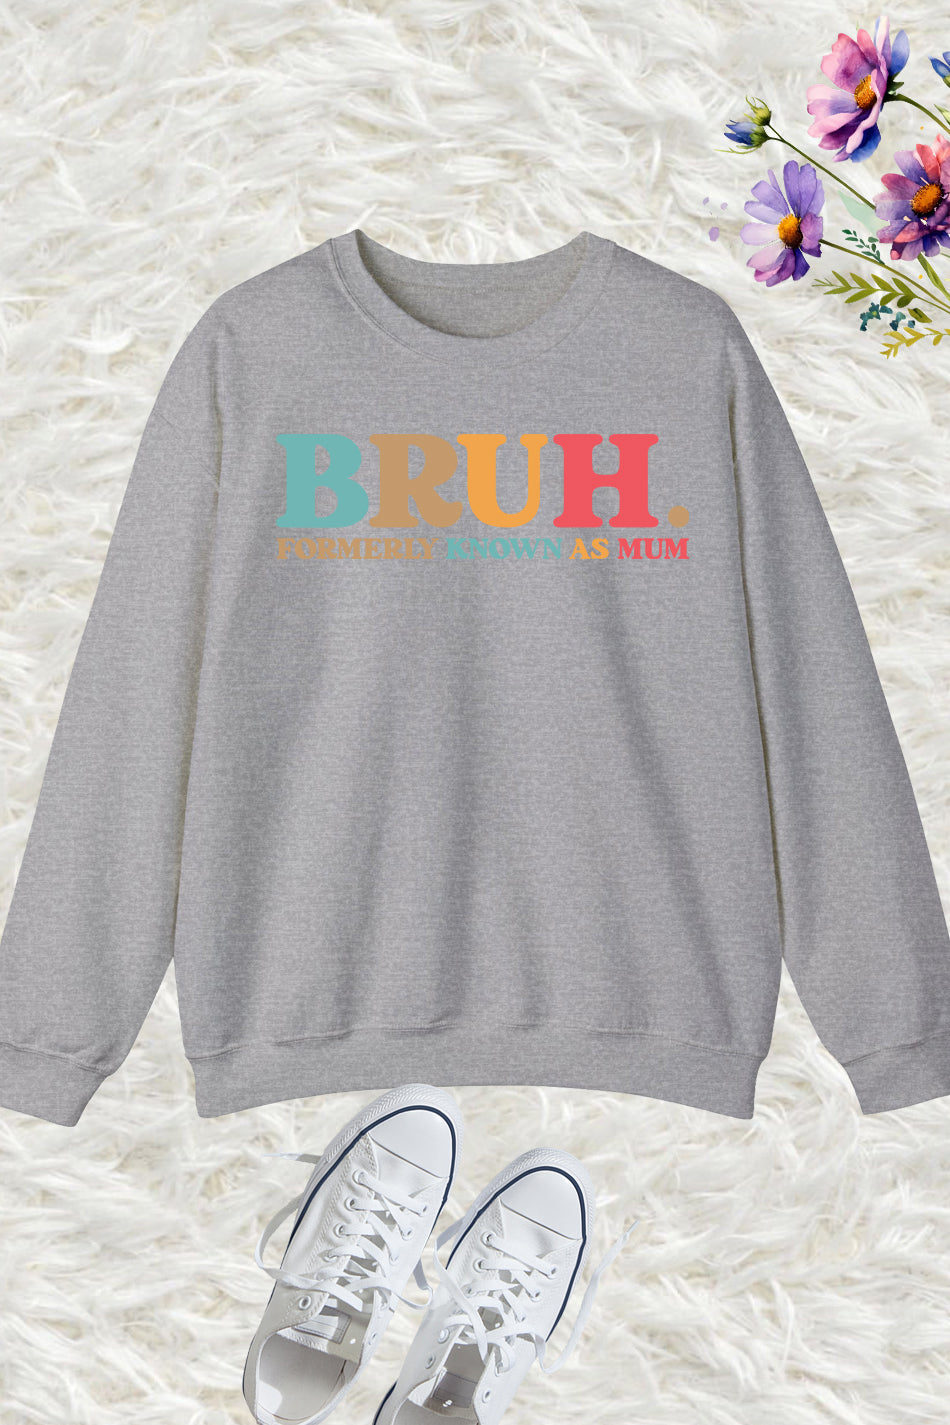 Bruh Formerly known as Mum Sweatshirt